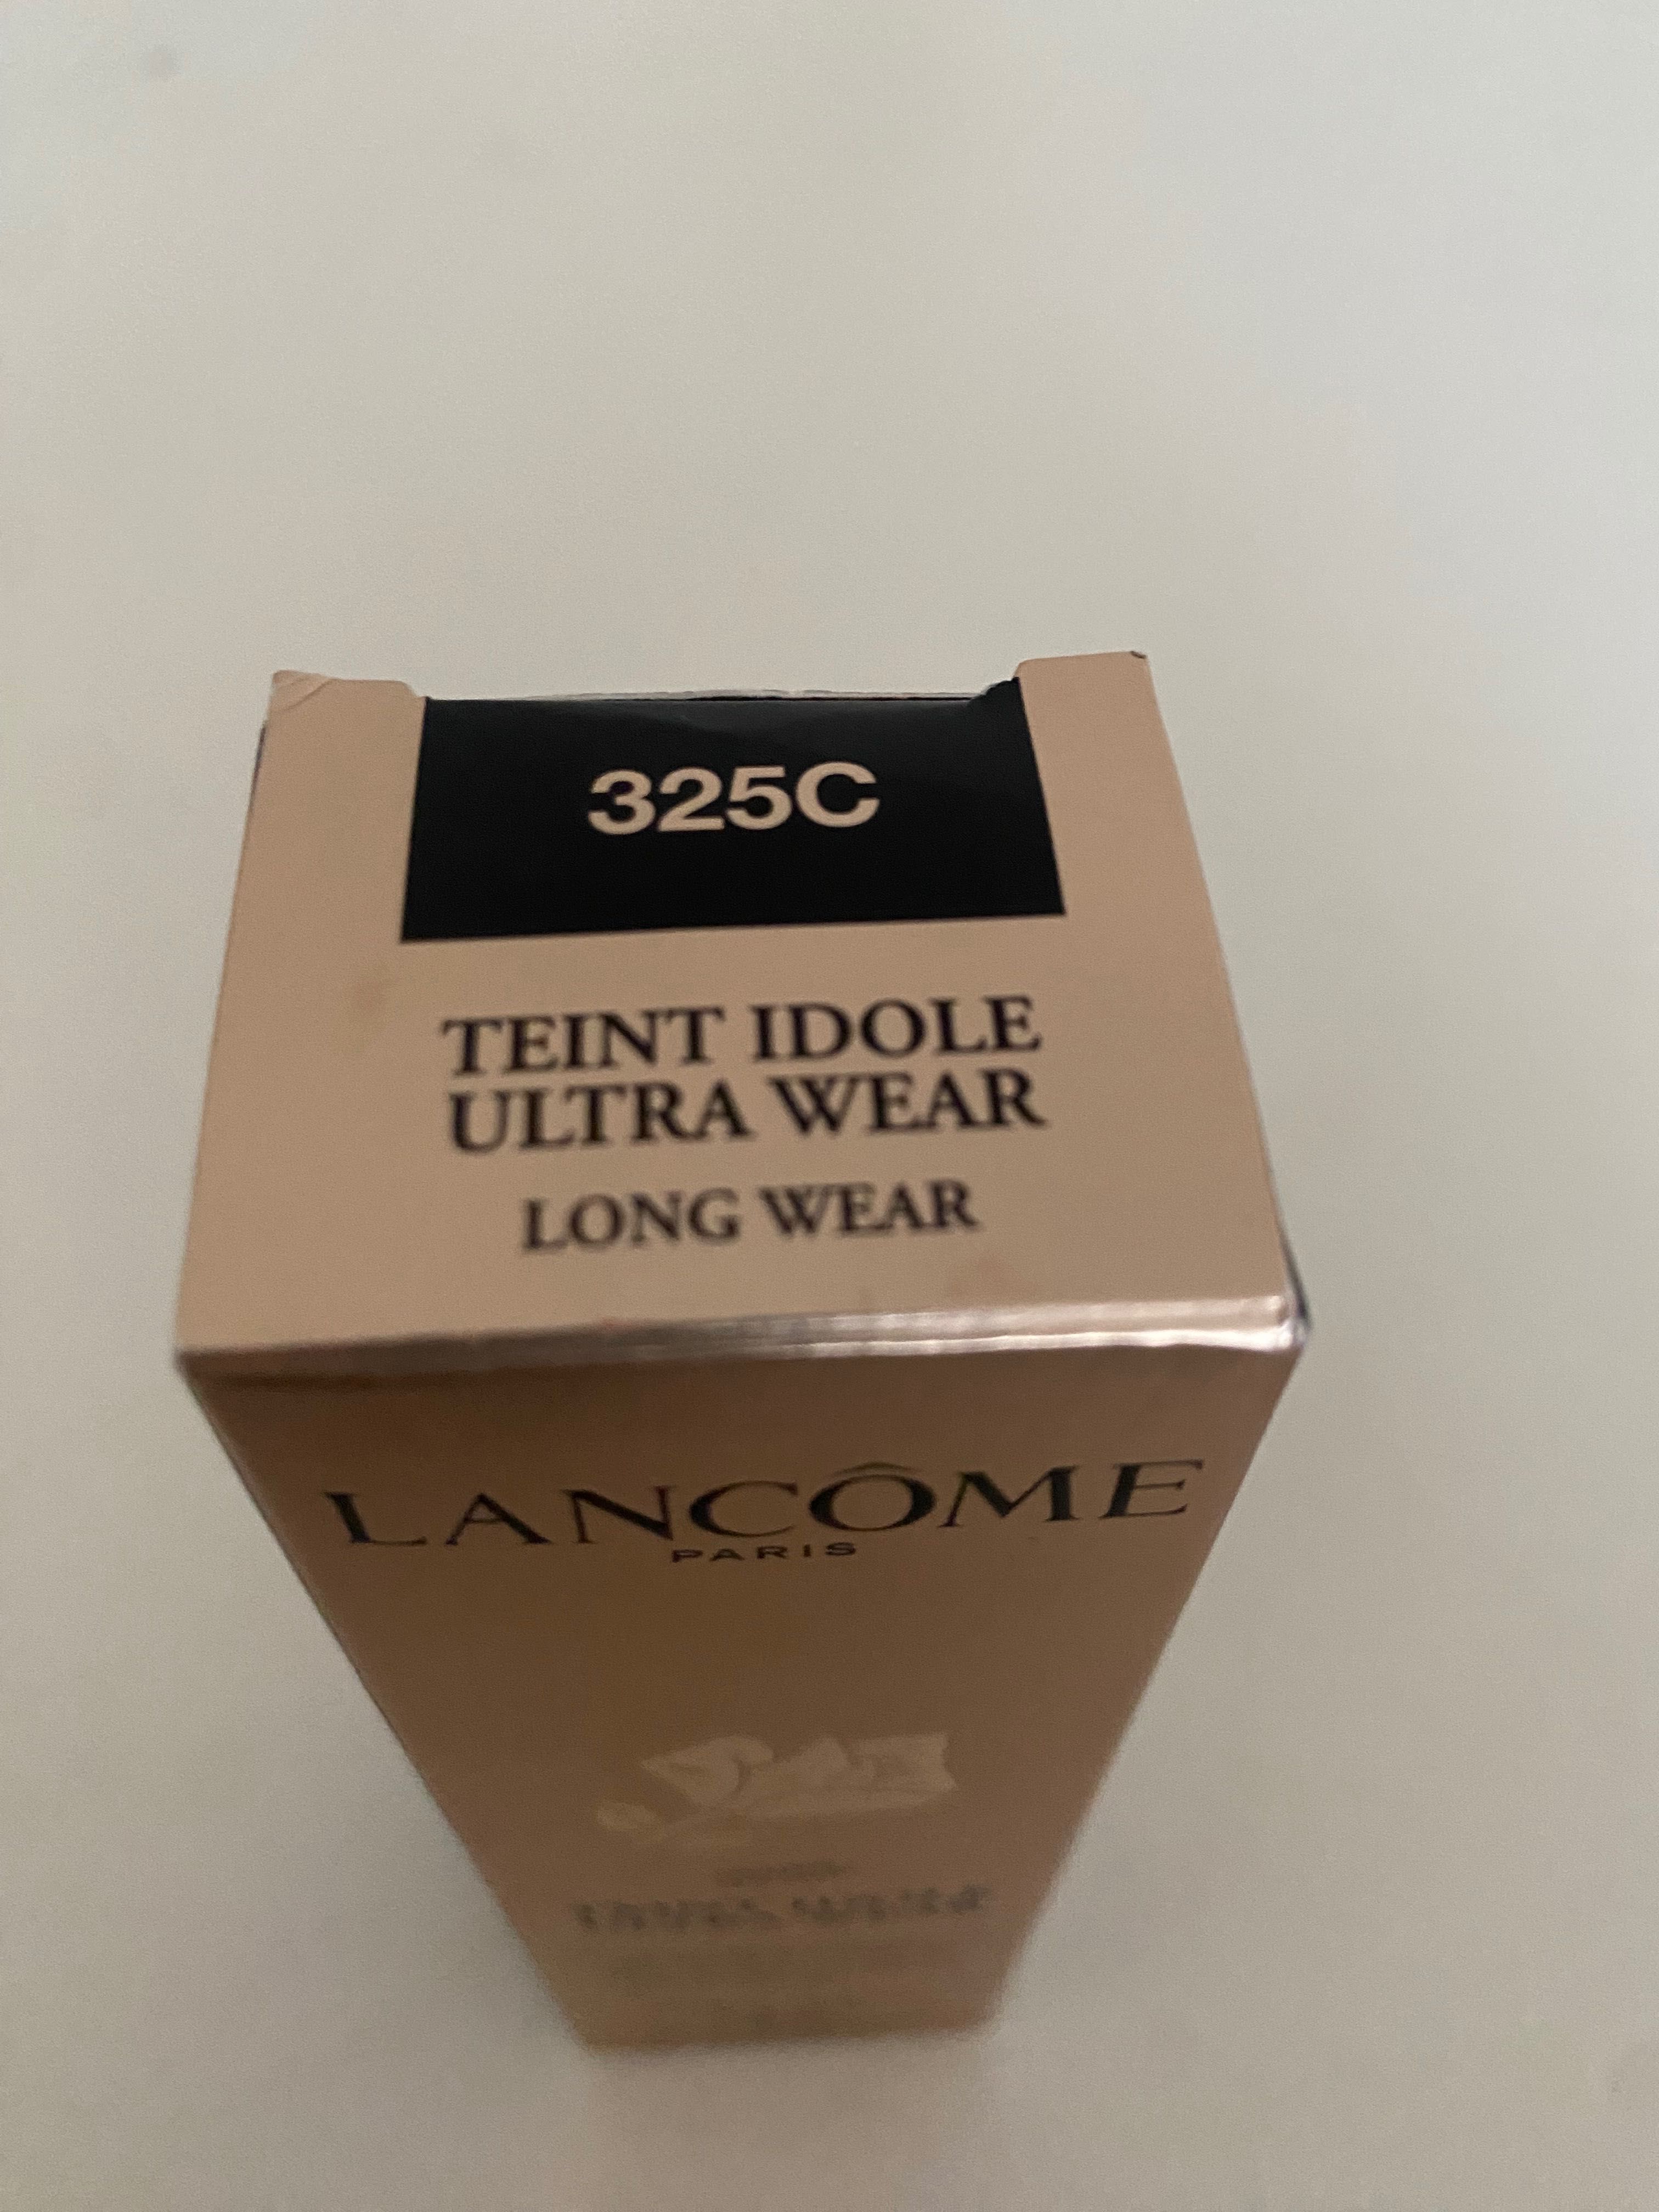 Lancome Teint idol ultra wear 325C